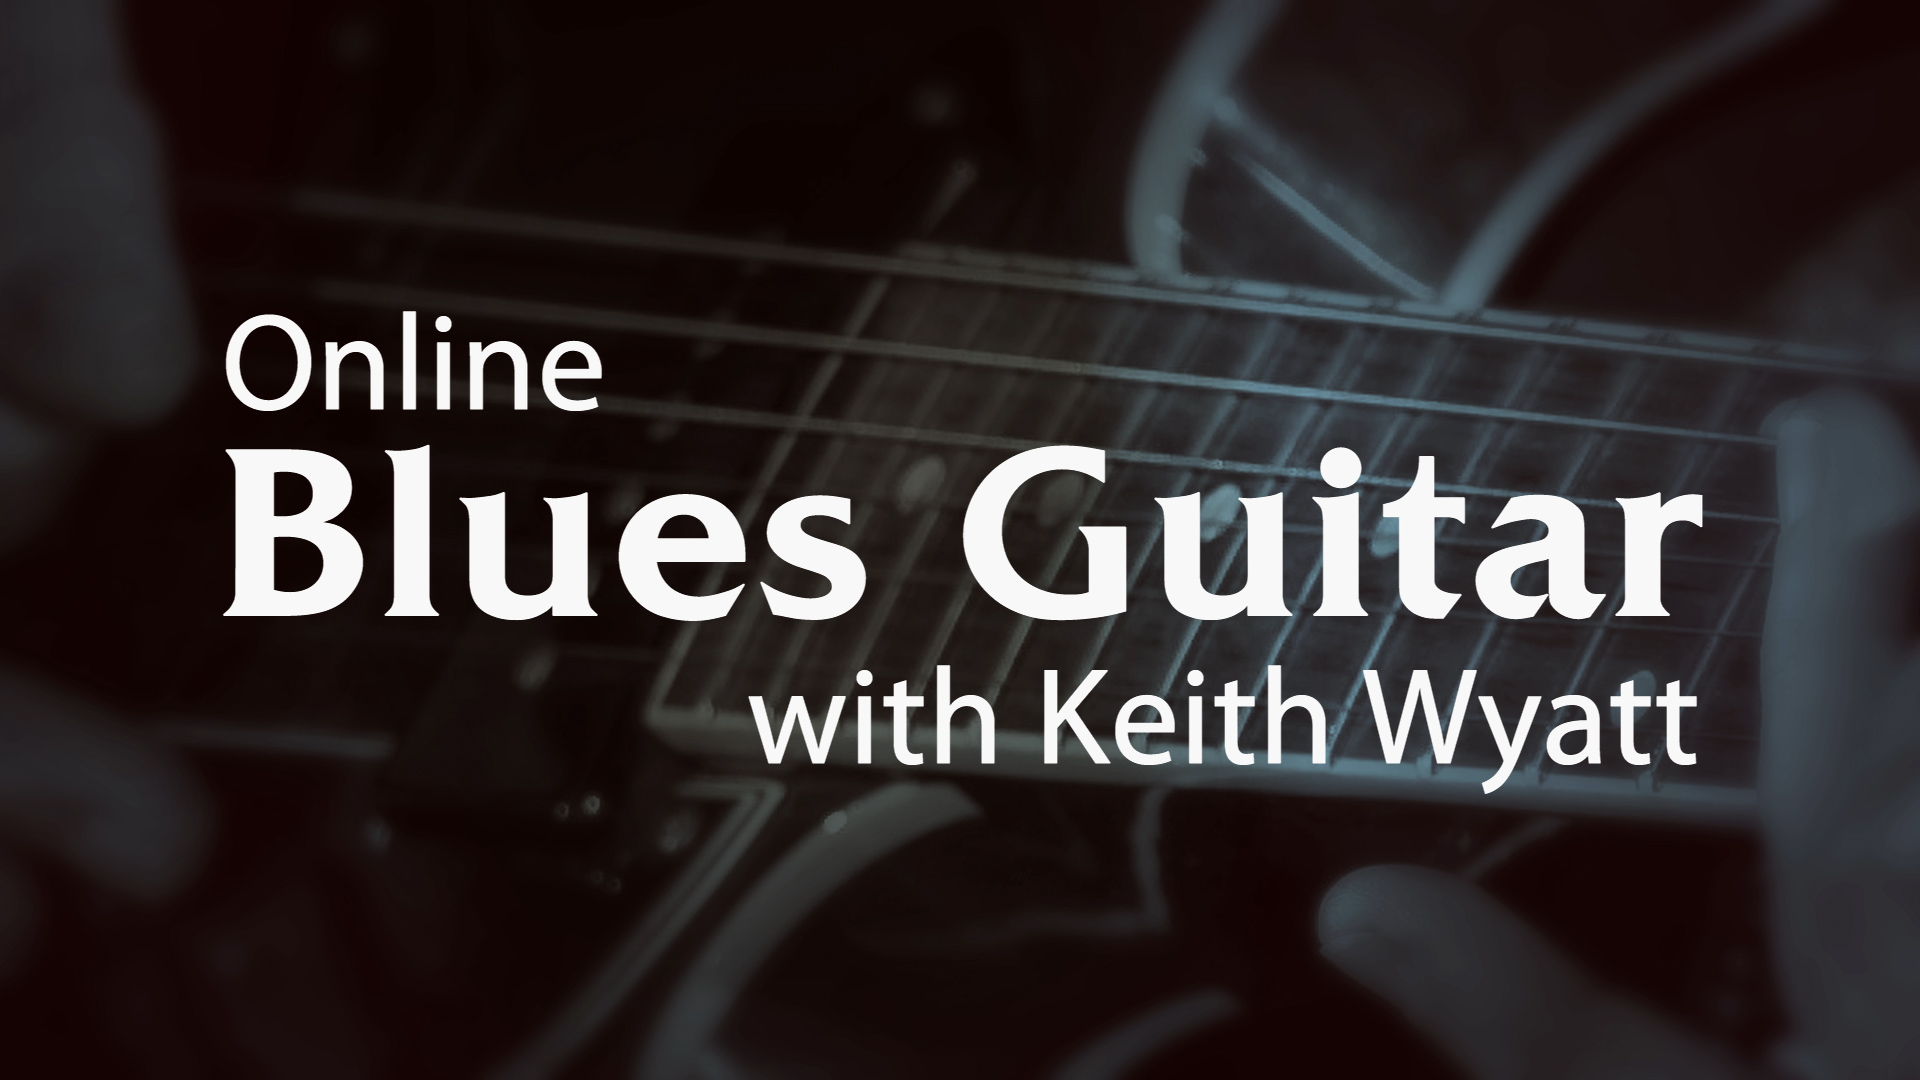 [一起创作艺术家在线蓝调吉他课程]Artistworks Online Blues Guitar Lessons with Keith Wyatt TUTORiAL（18.73GB）插图